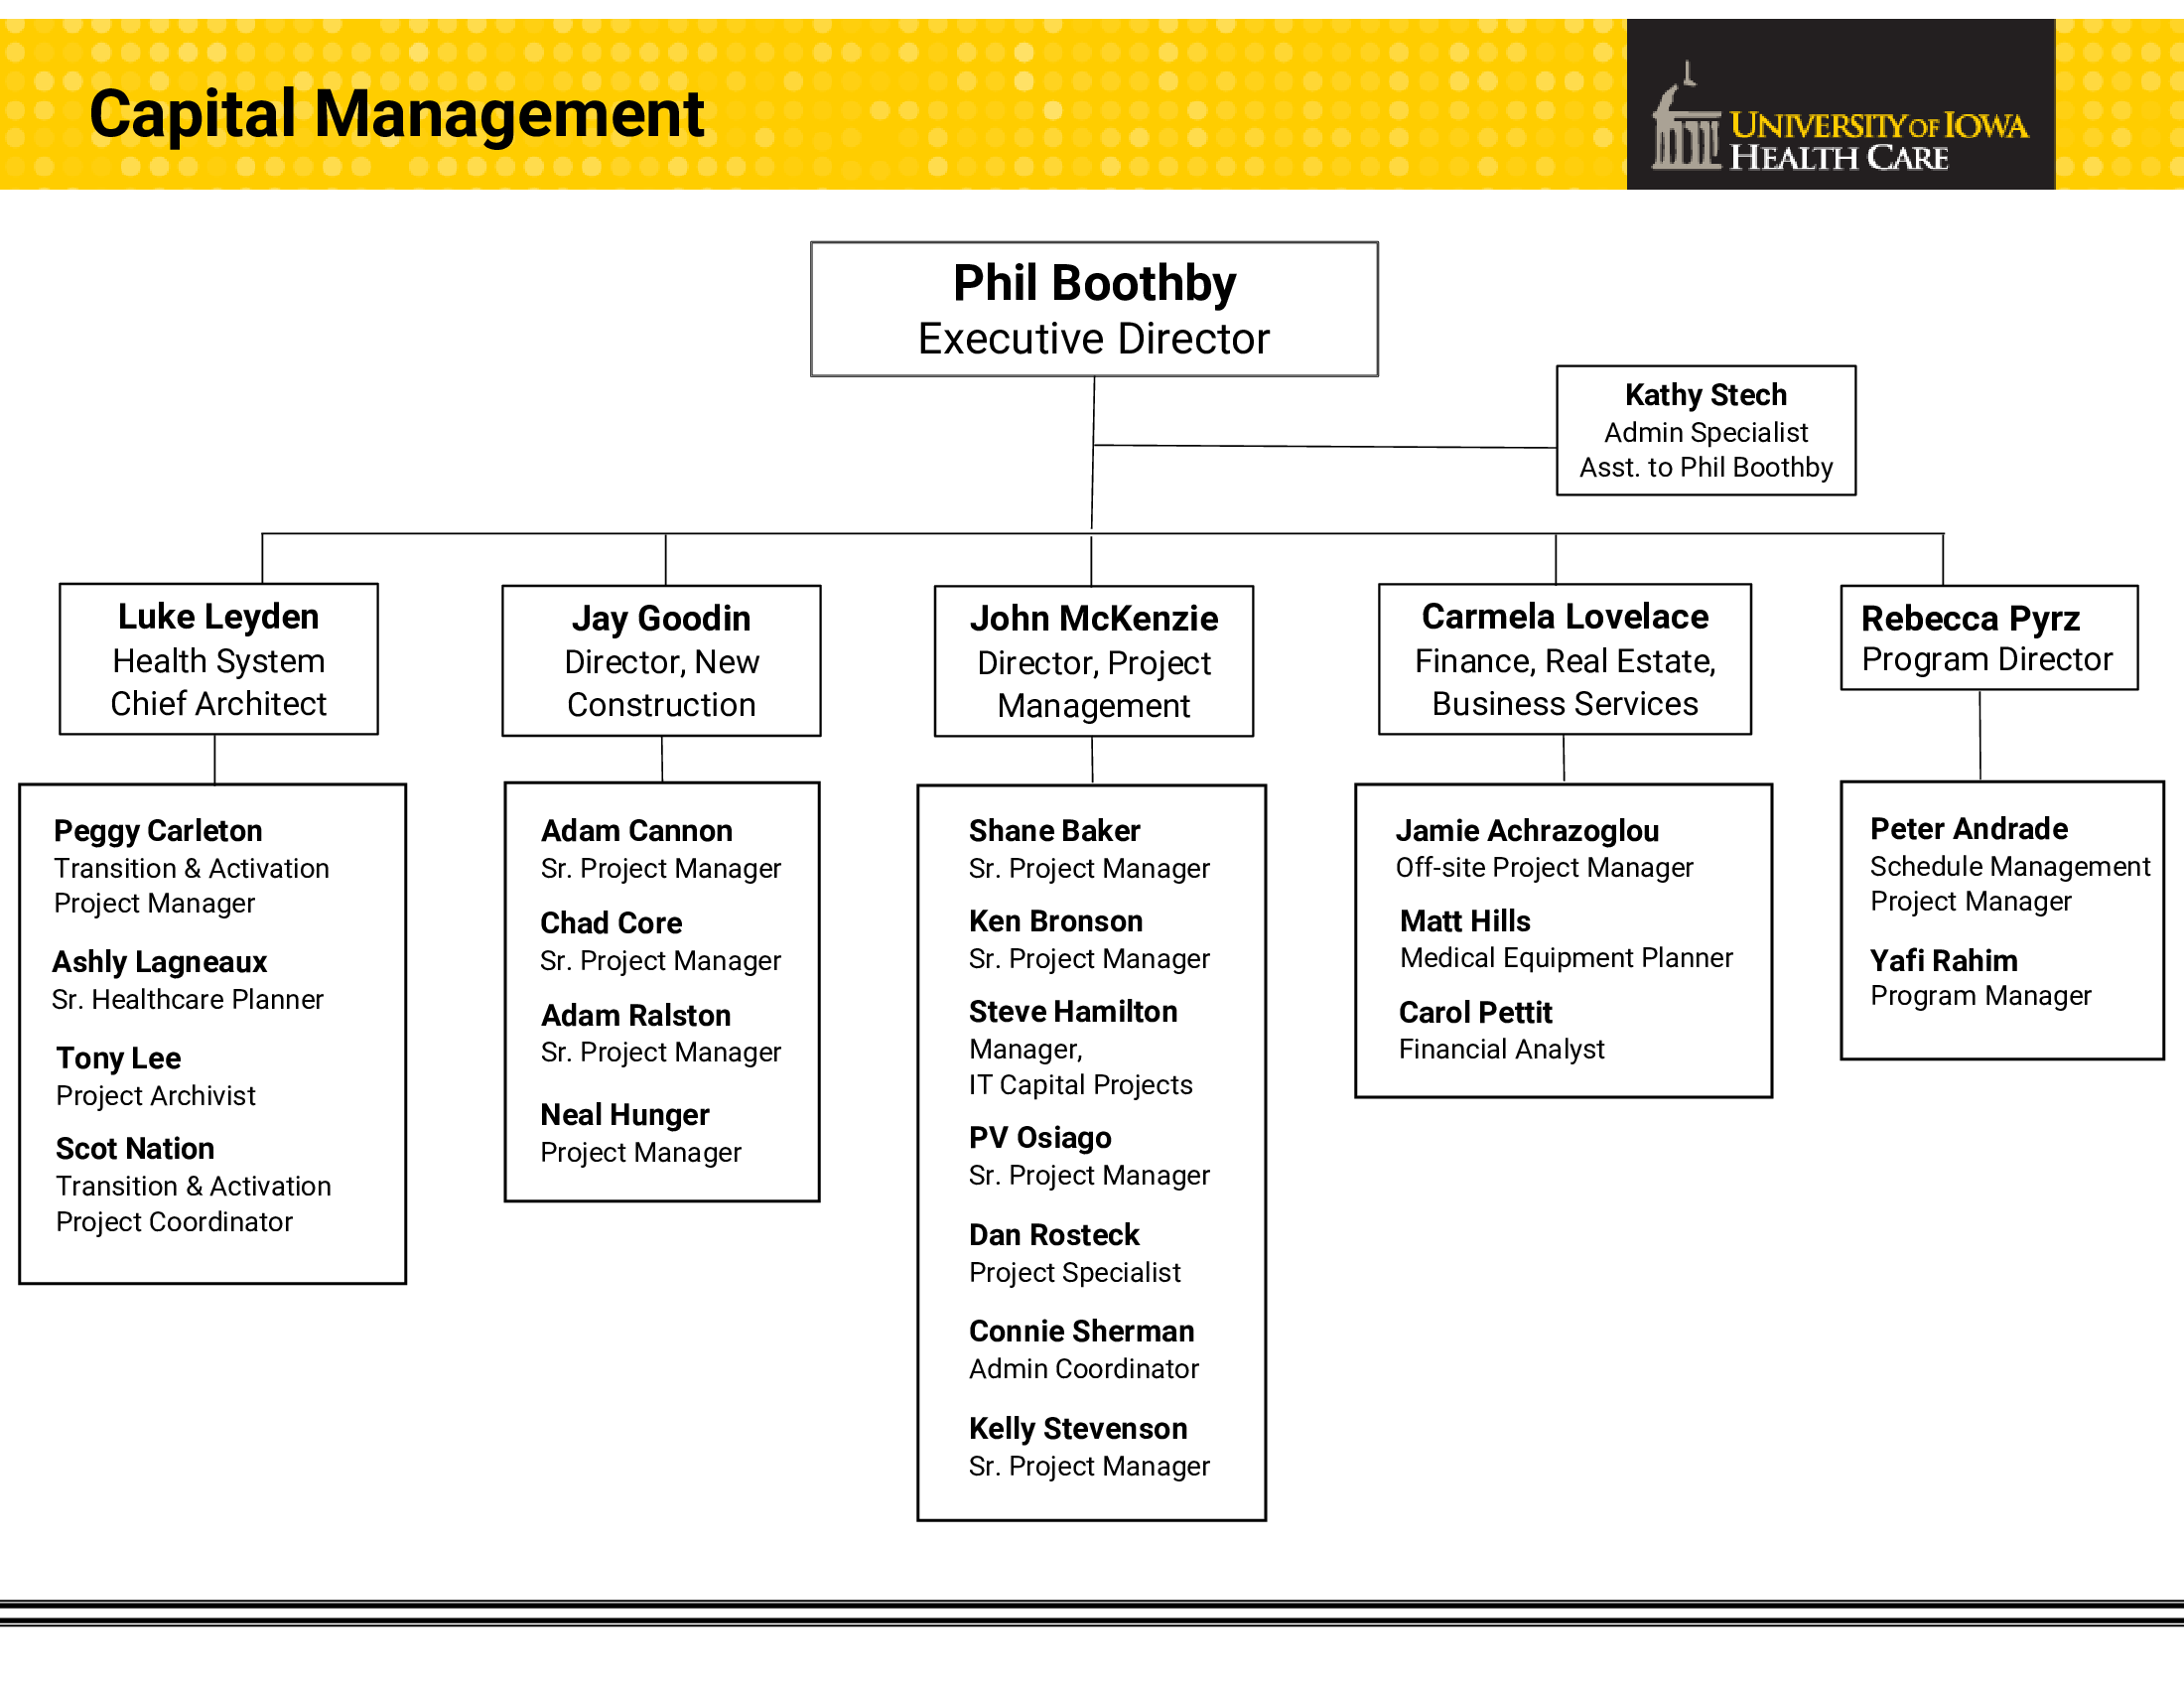 Capital Management Org Chart